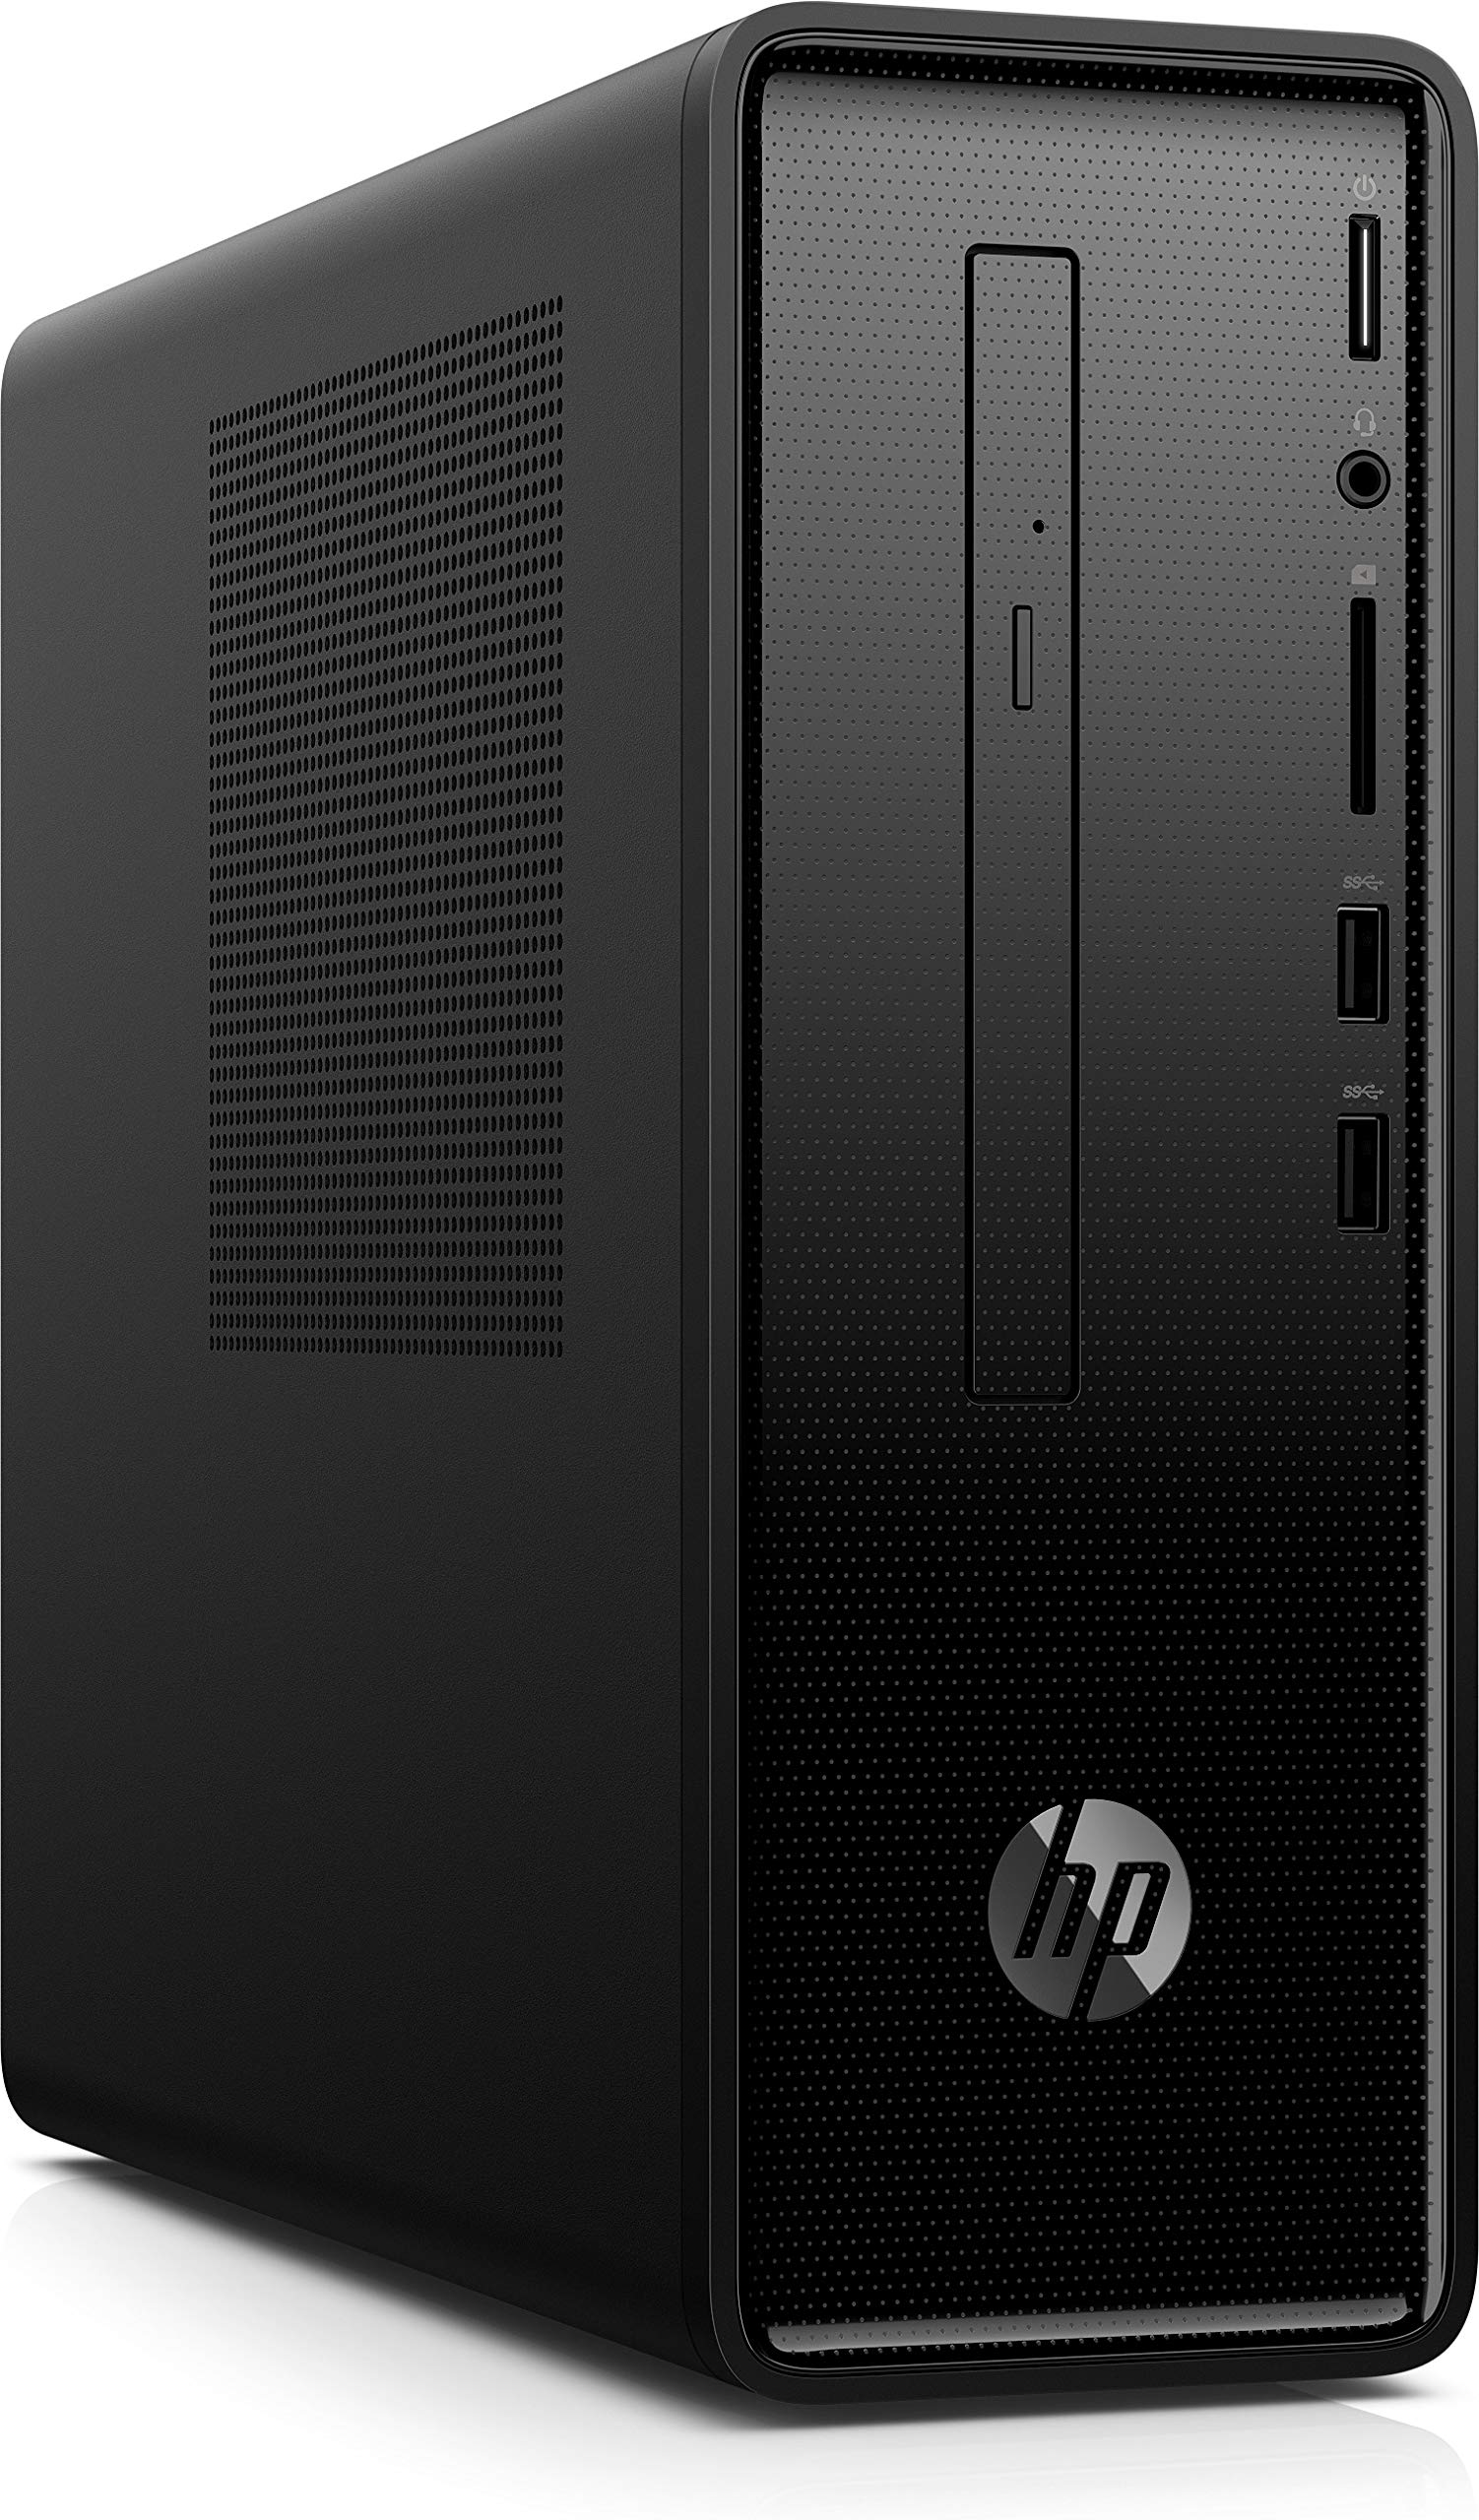 2018 HP - Slim Desktop - Intel Core i7-8GB Memory - 1TB Hard Drive - HP Finish in Dark Black